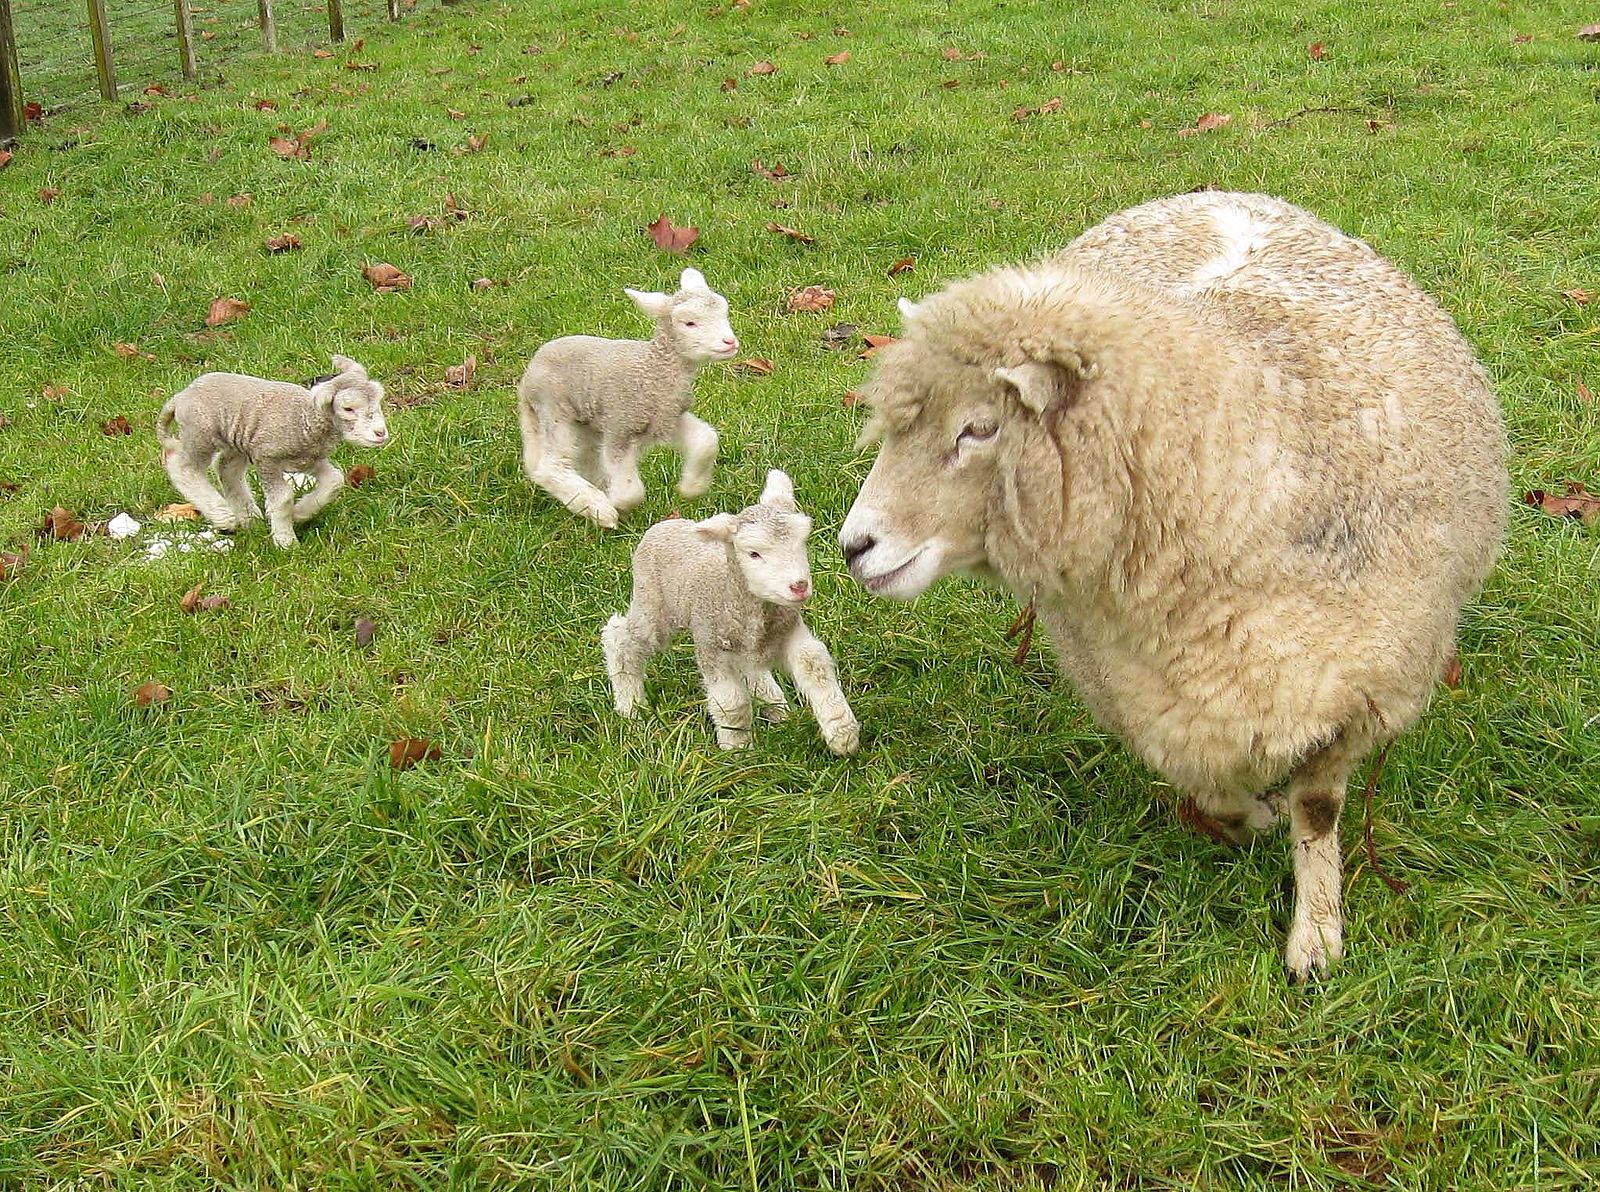 Romney_sheep,_ewe_with_triplet_lambs_in_New_Zealand